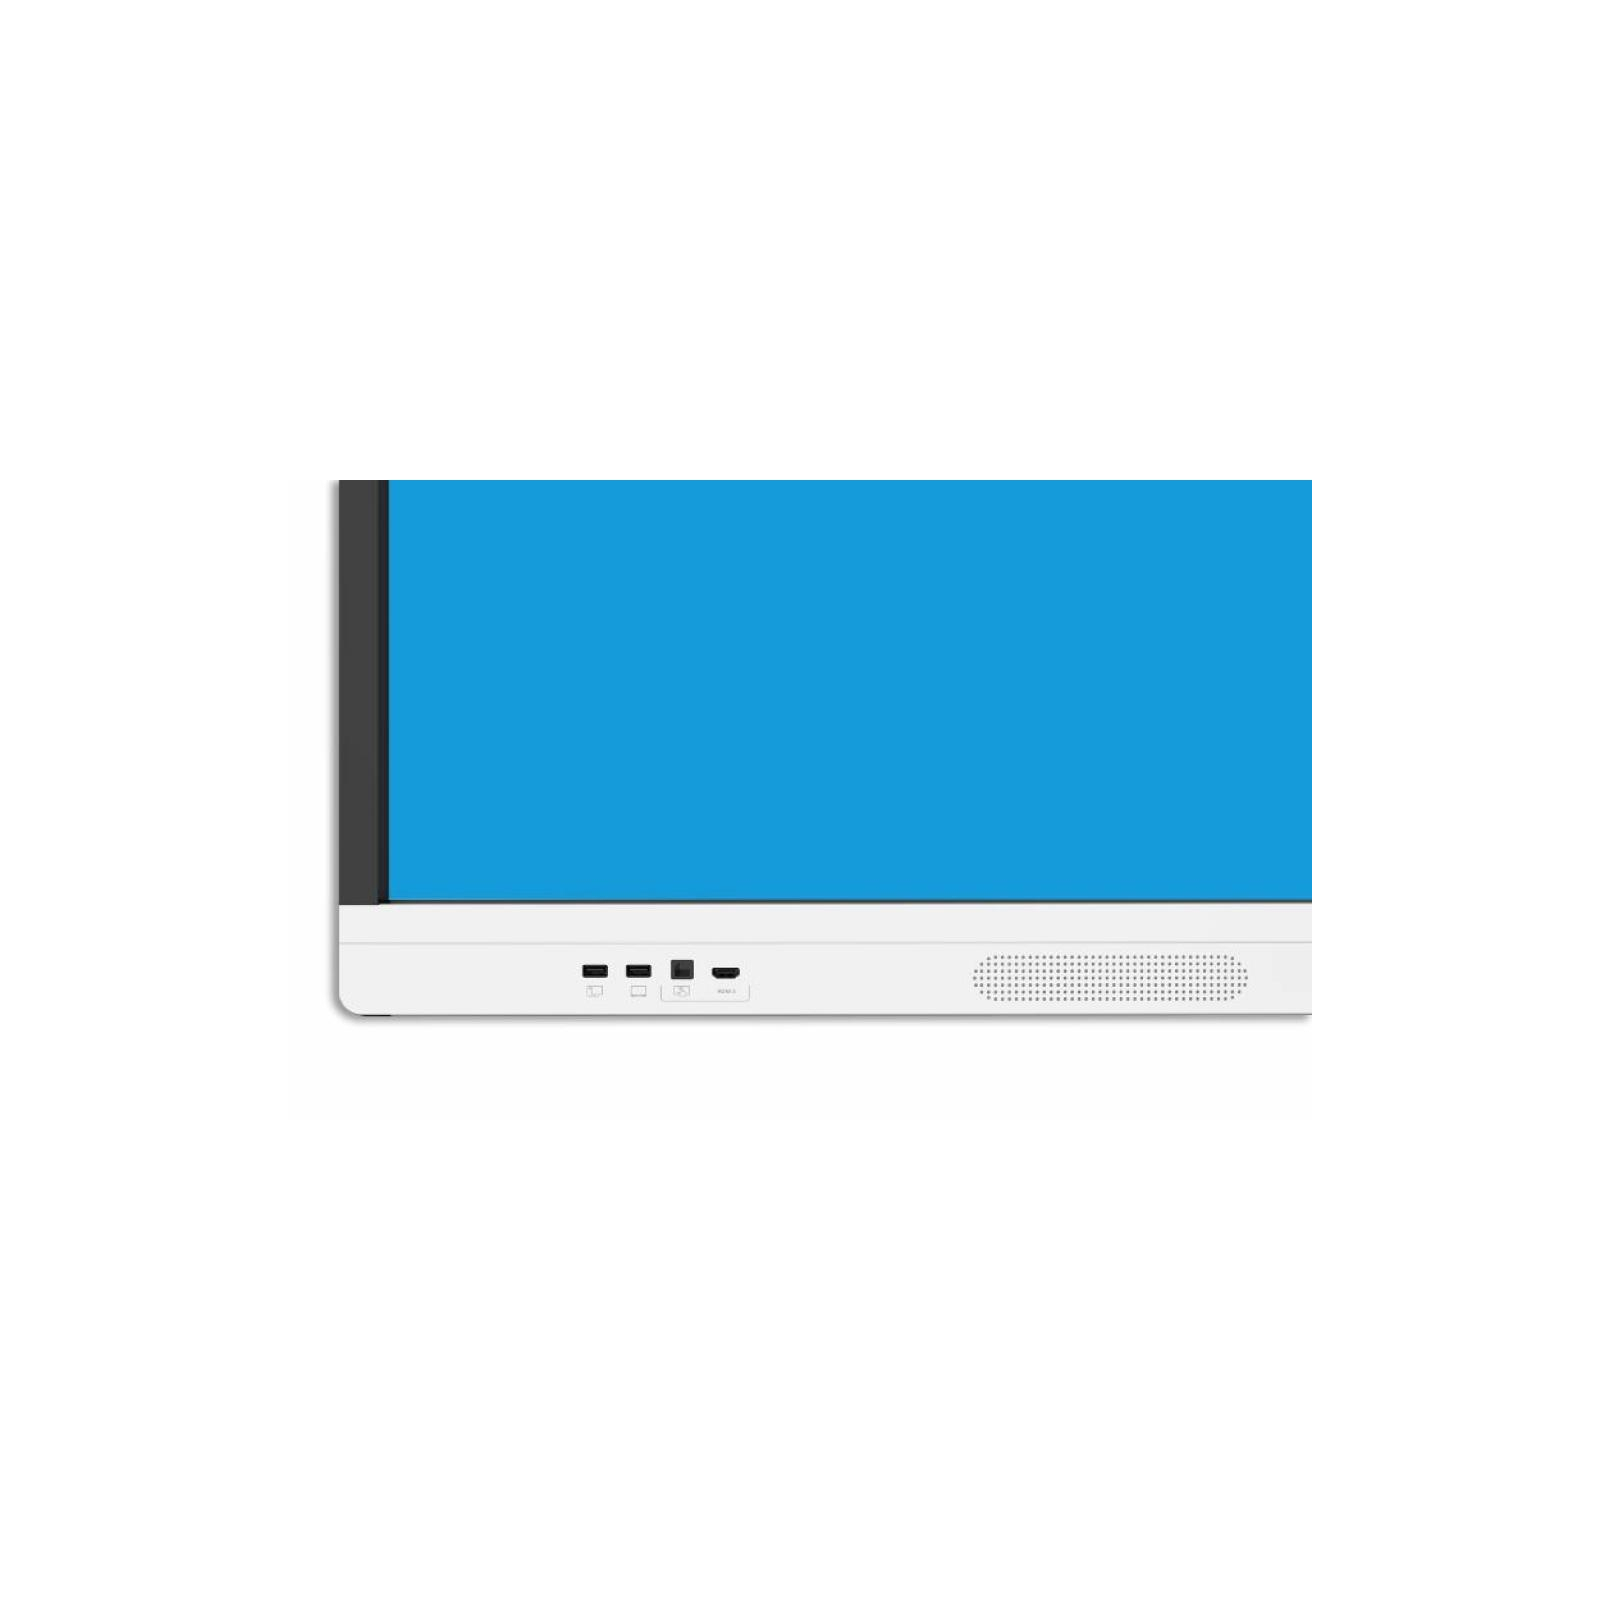 LCD панель Smart SBID-MX275-V4 изображение 4